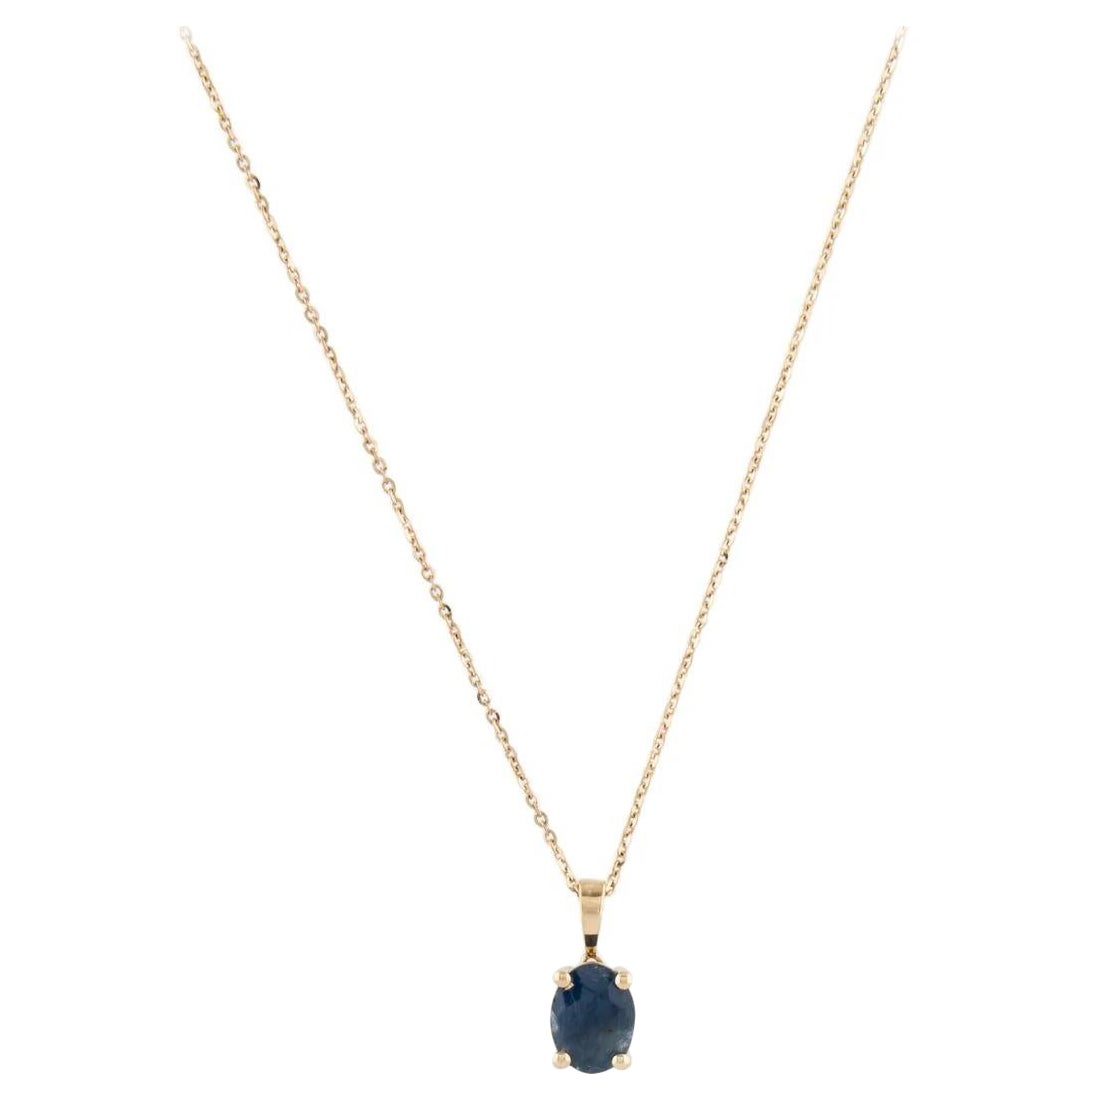 14K Sapphire Pendant Necklace - 1.33ct, Elegant Blue Gemstone, Timeless Design